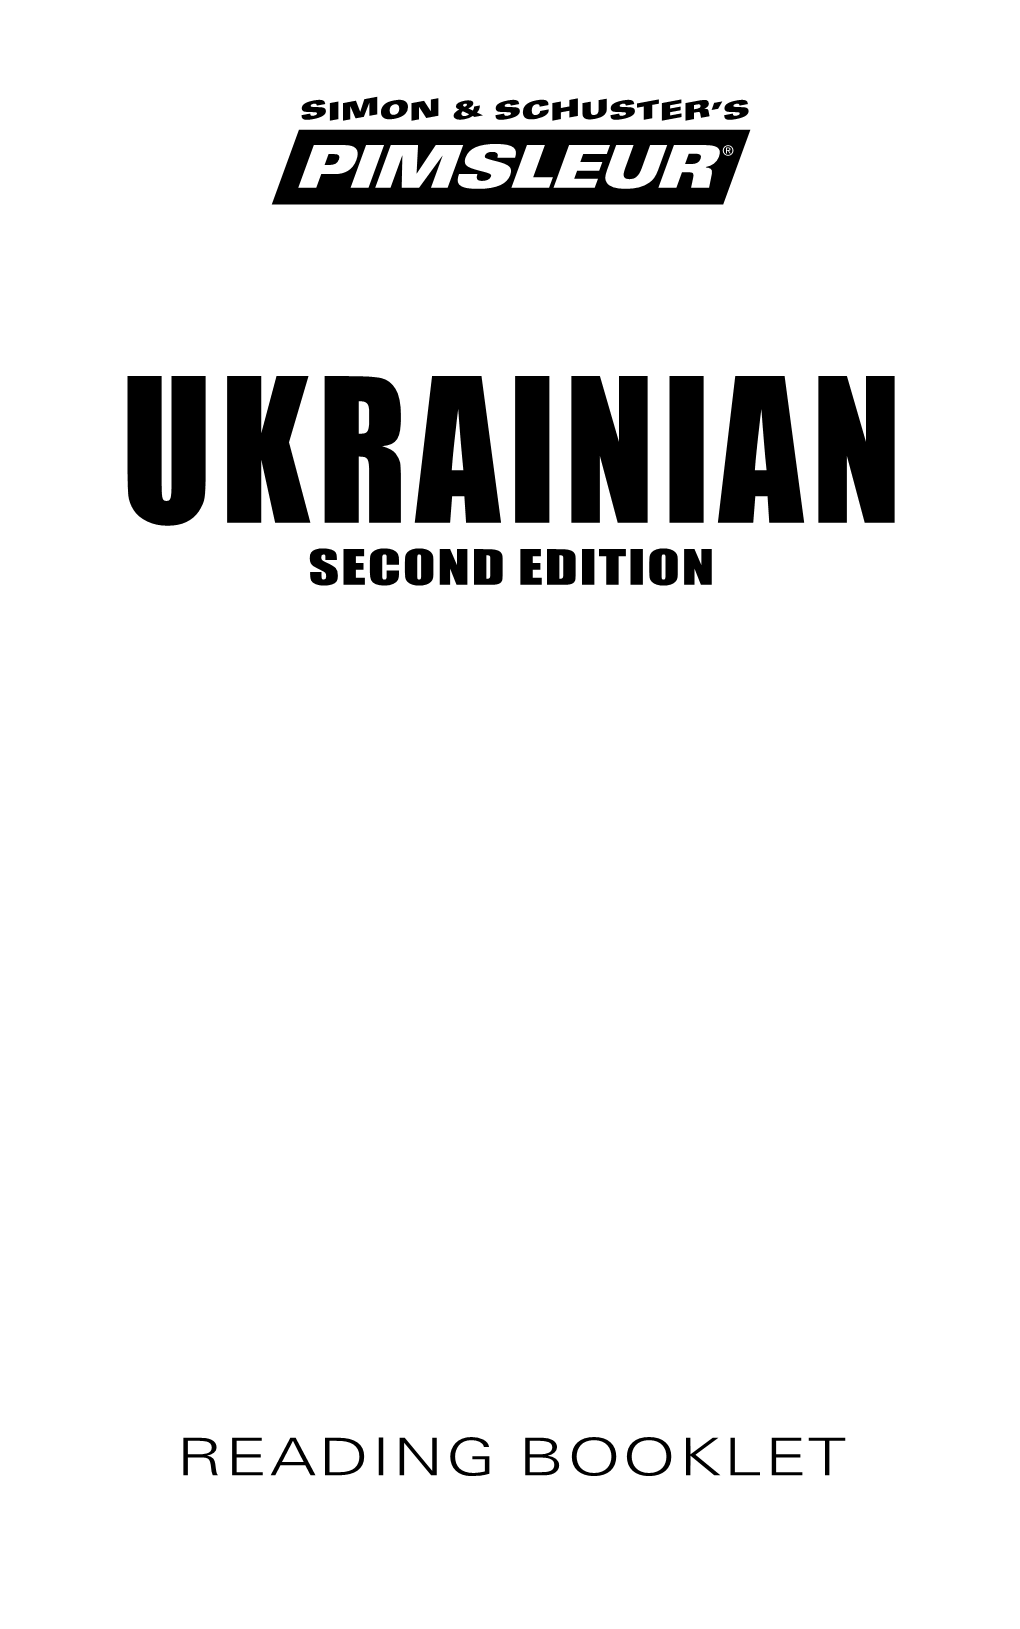 Ukrainian Second Edition